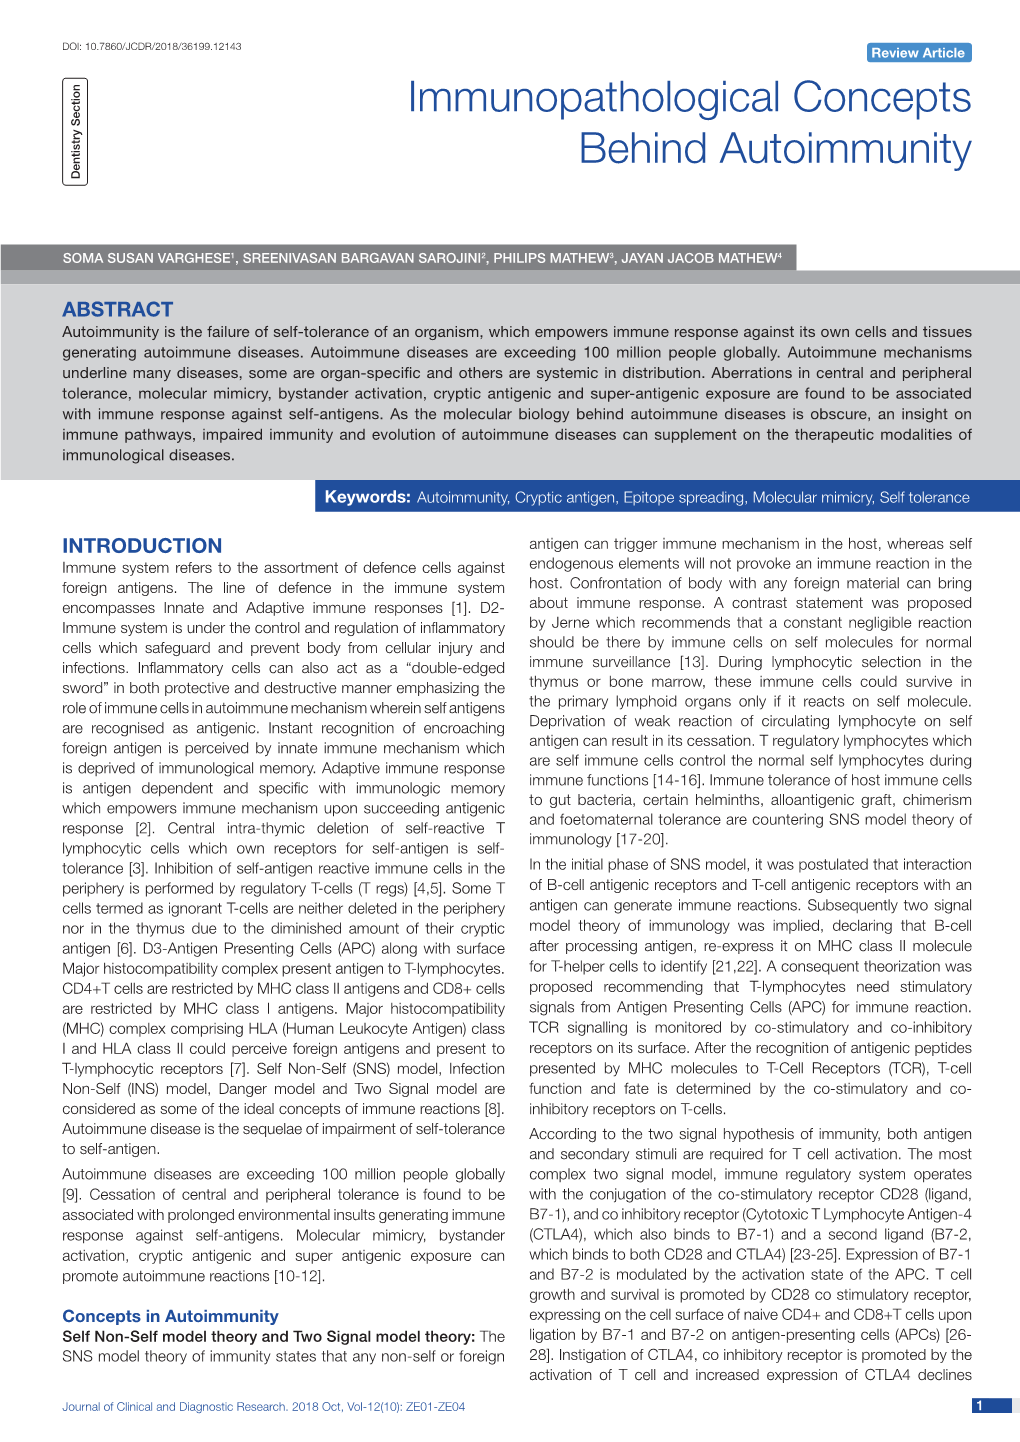 Immunopathological Concepts Behind Autoimmunity Dentistry Section